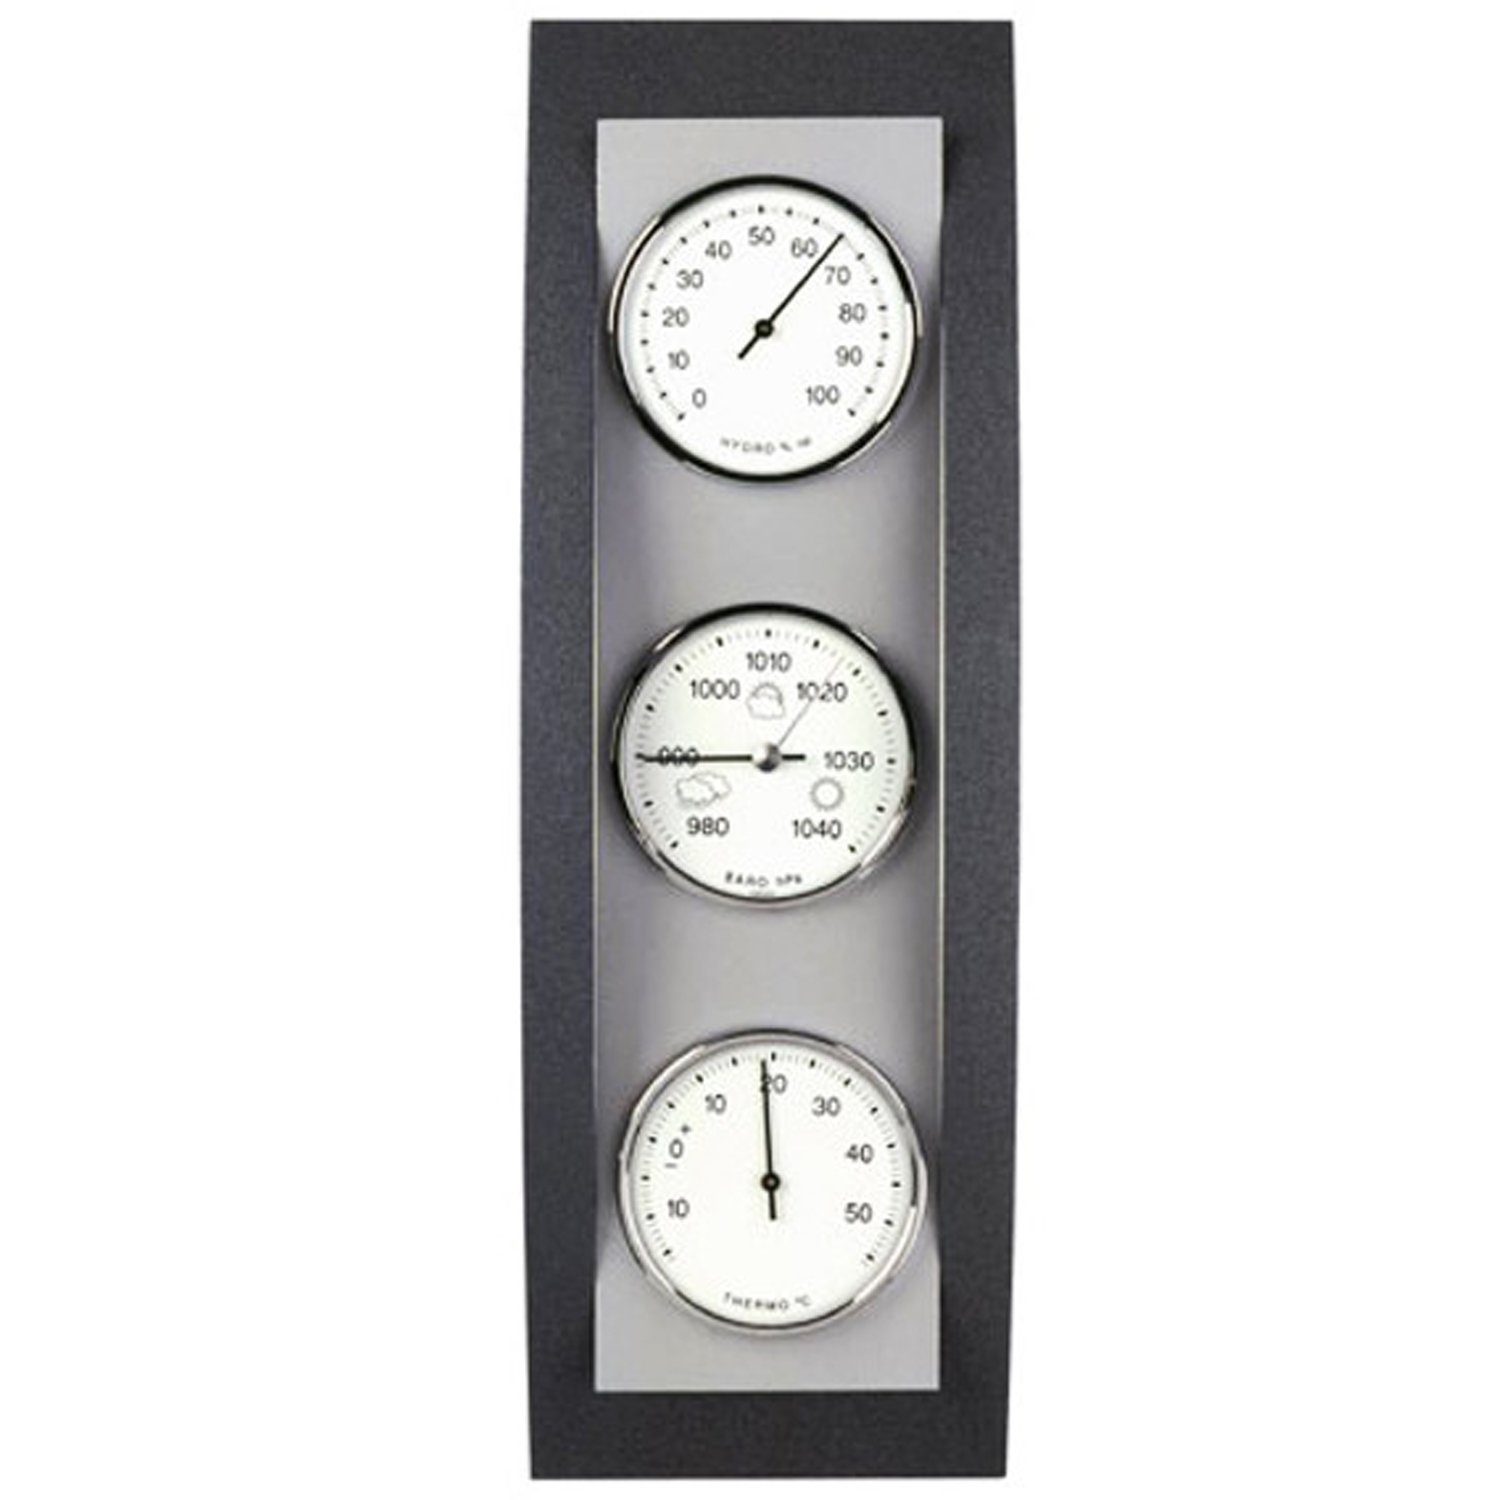 TFA Dostmann TFA 20.1082 mit Wetterstation analogem Hygrometer Thermometer Buche-anthrazit-Aluminium Barometer